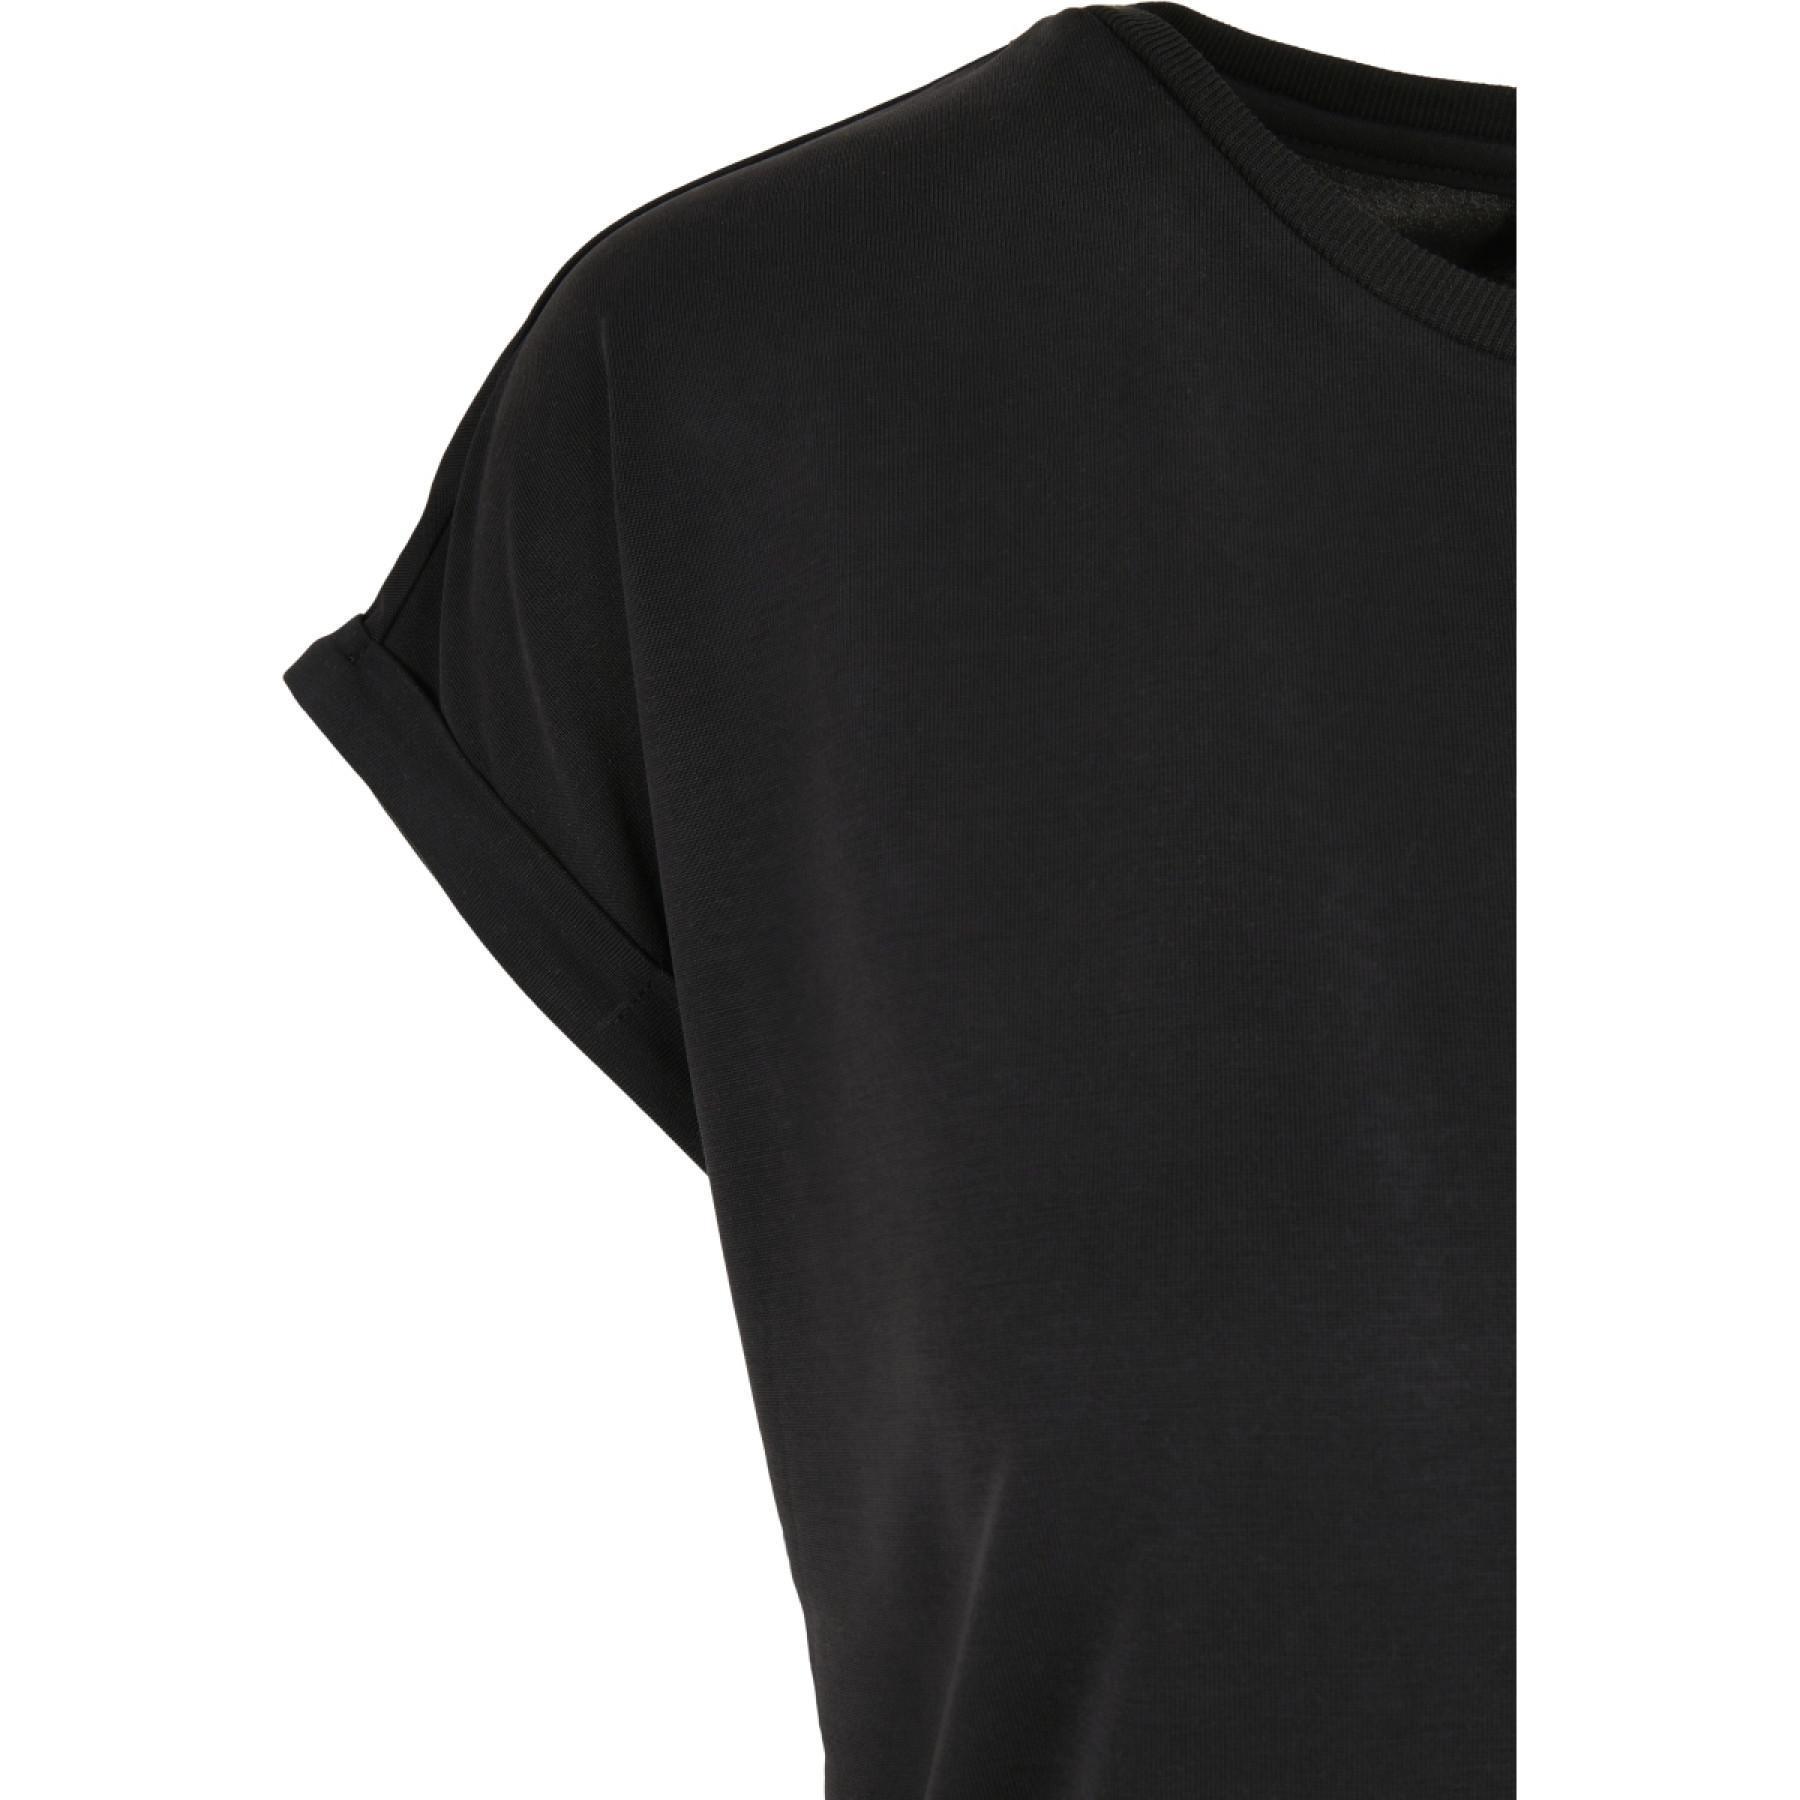 T-shirt donna Urban Classics modal extended shoulder